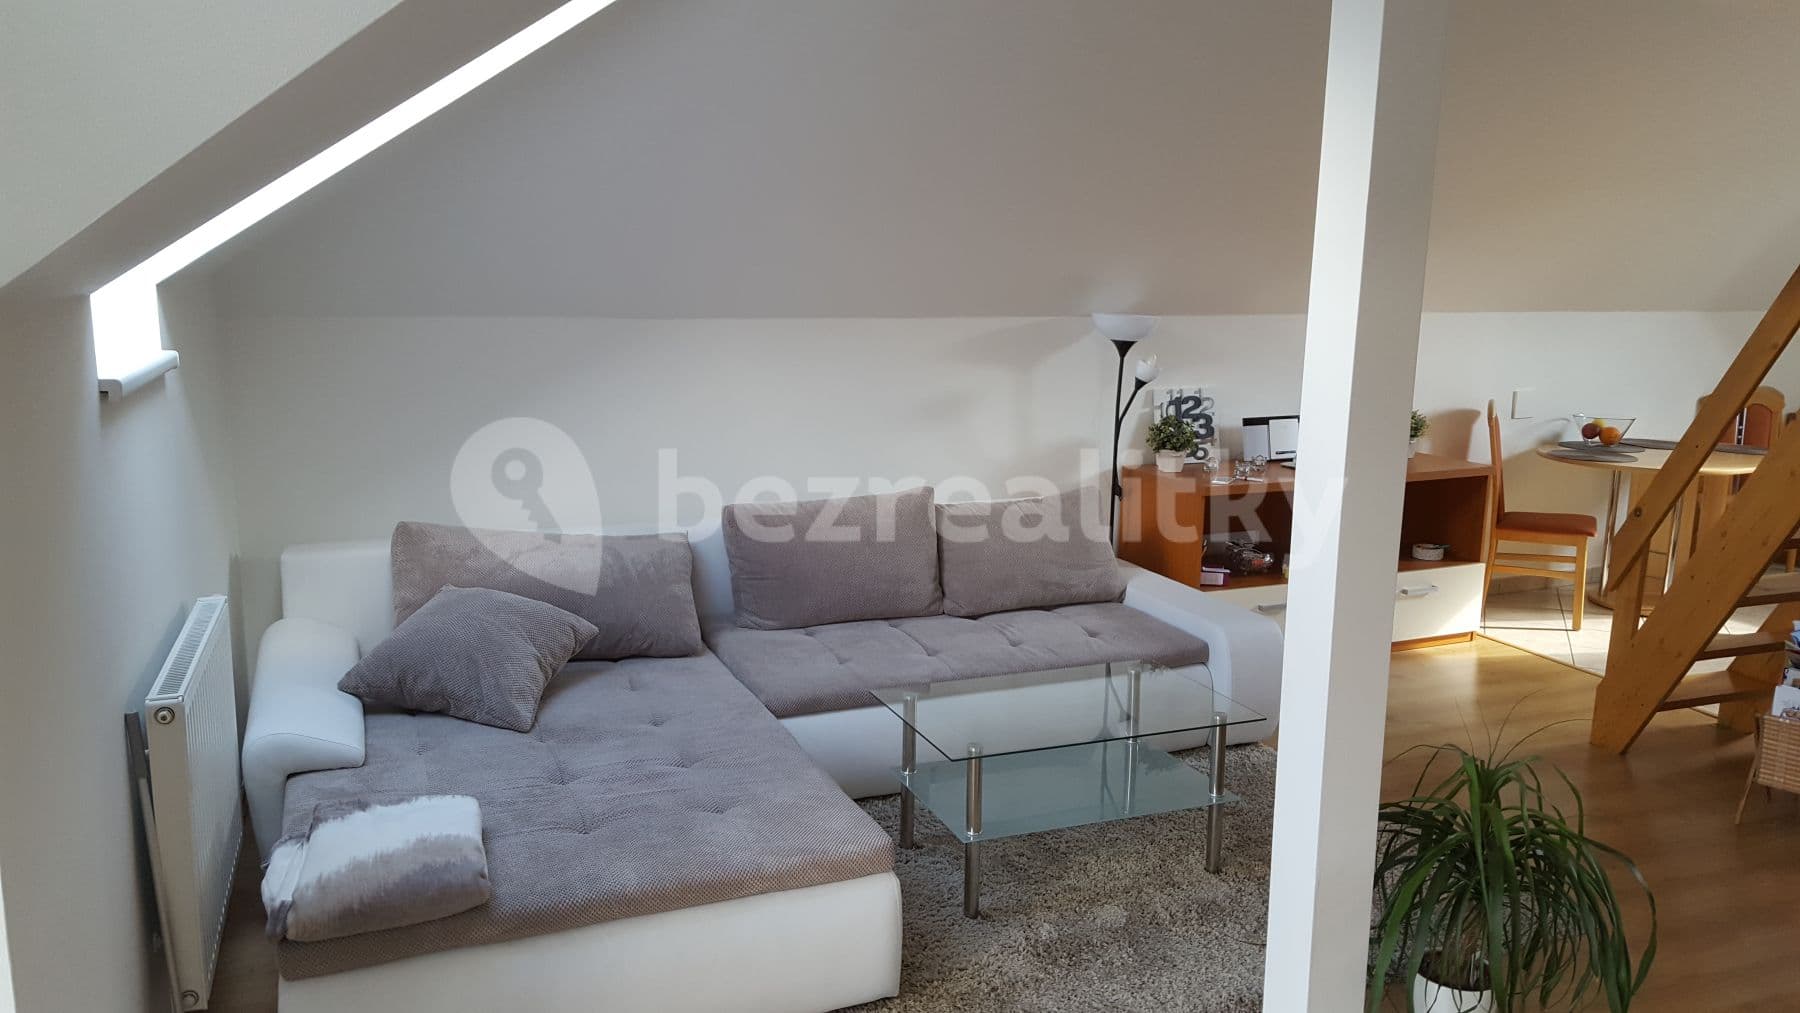 2 bedroom with open-plan kitchen flat to rent, 95 m², Svatoplukova, Brno, Jihomoravský Region